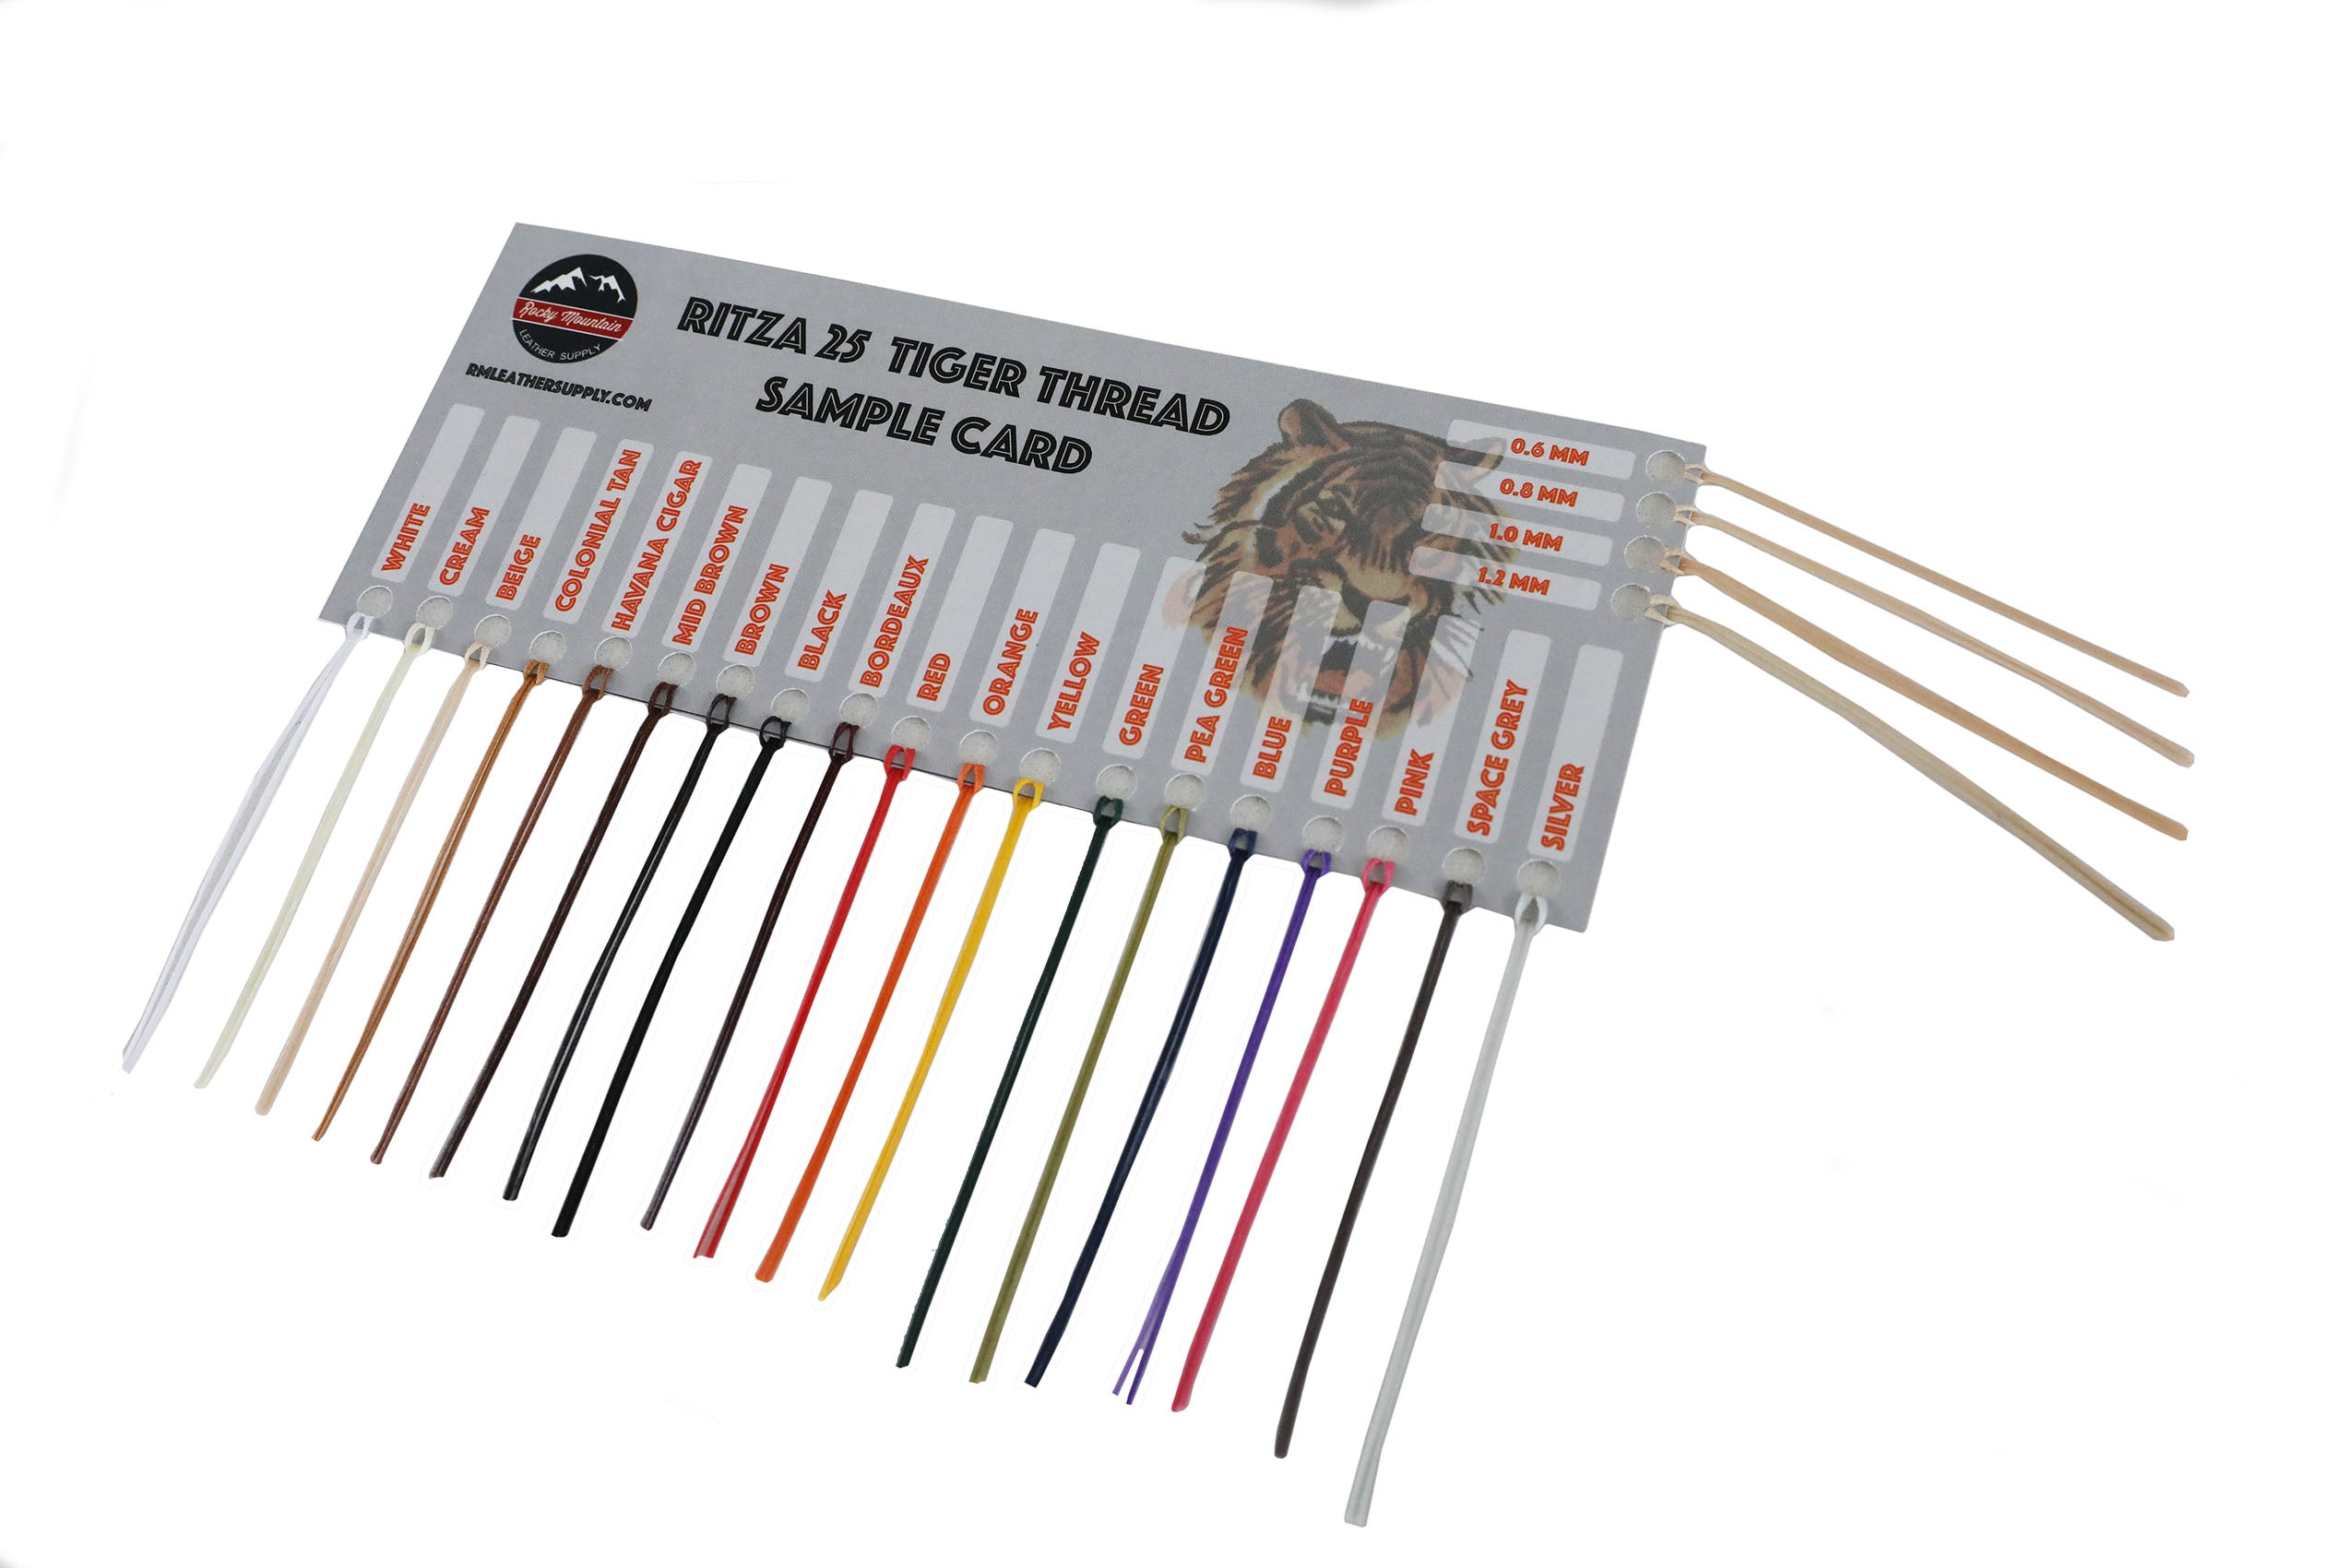 0.6 / 0.8 / 1.0 / 1.2 mm - Ritza 25 Tiger Thread - Sample Card